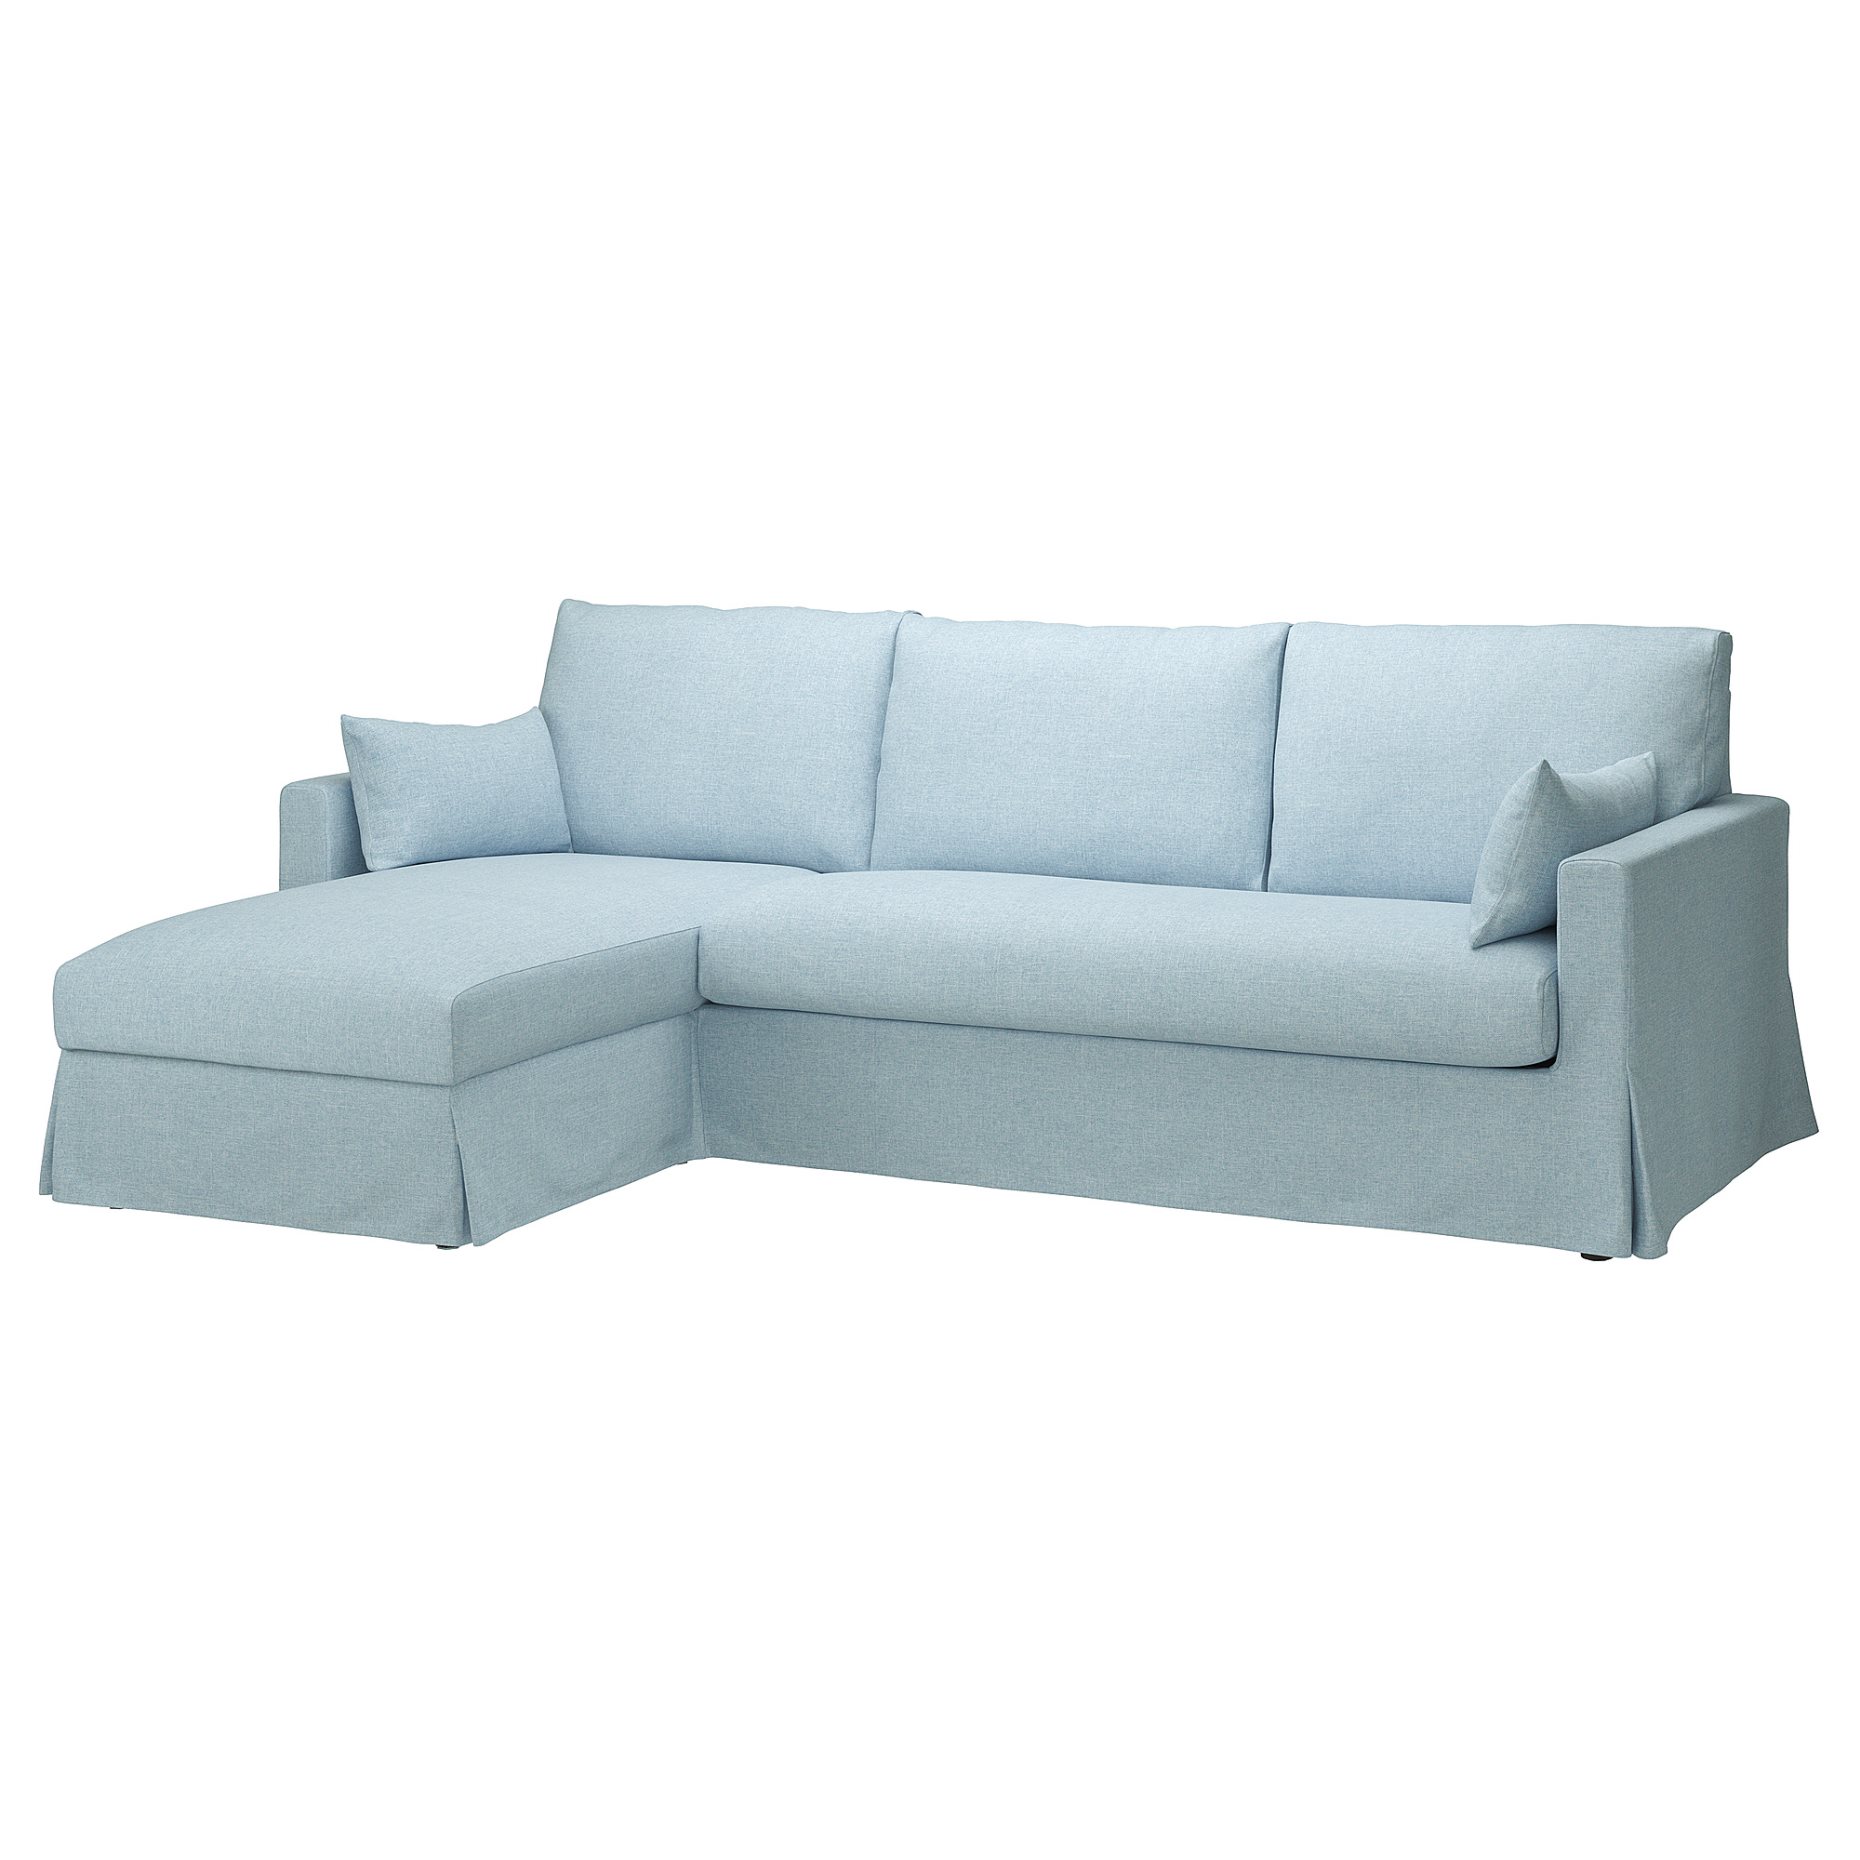 HYLTARP, κάλυμμα για 3θέσιο καναπέ με σεζλονγκ, αριστερό, 405.482.72